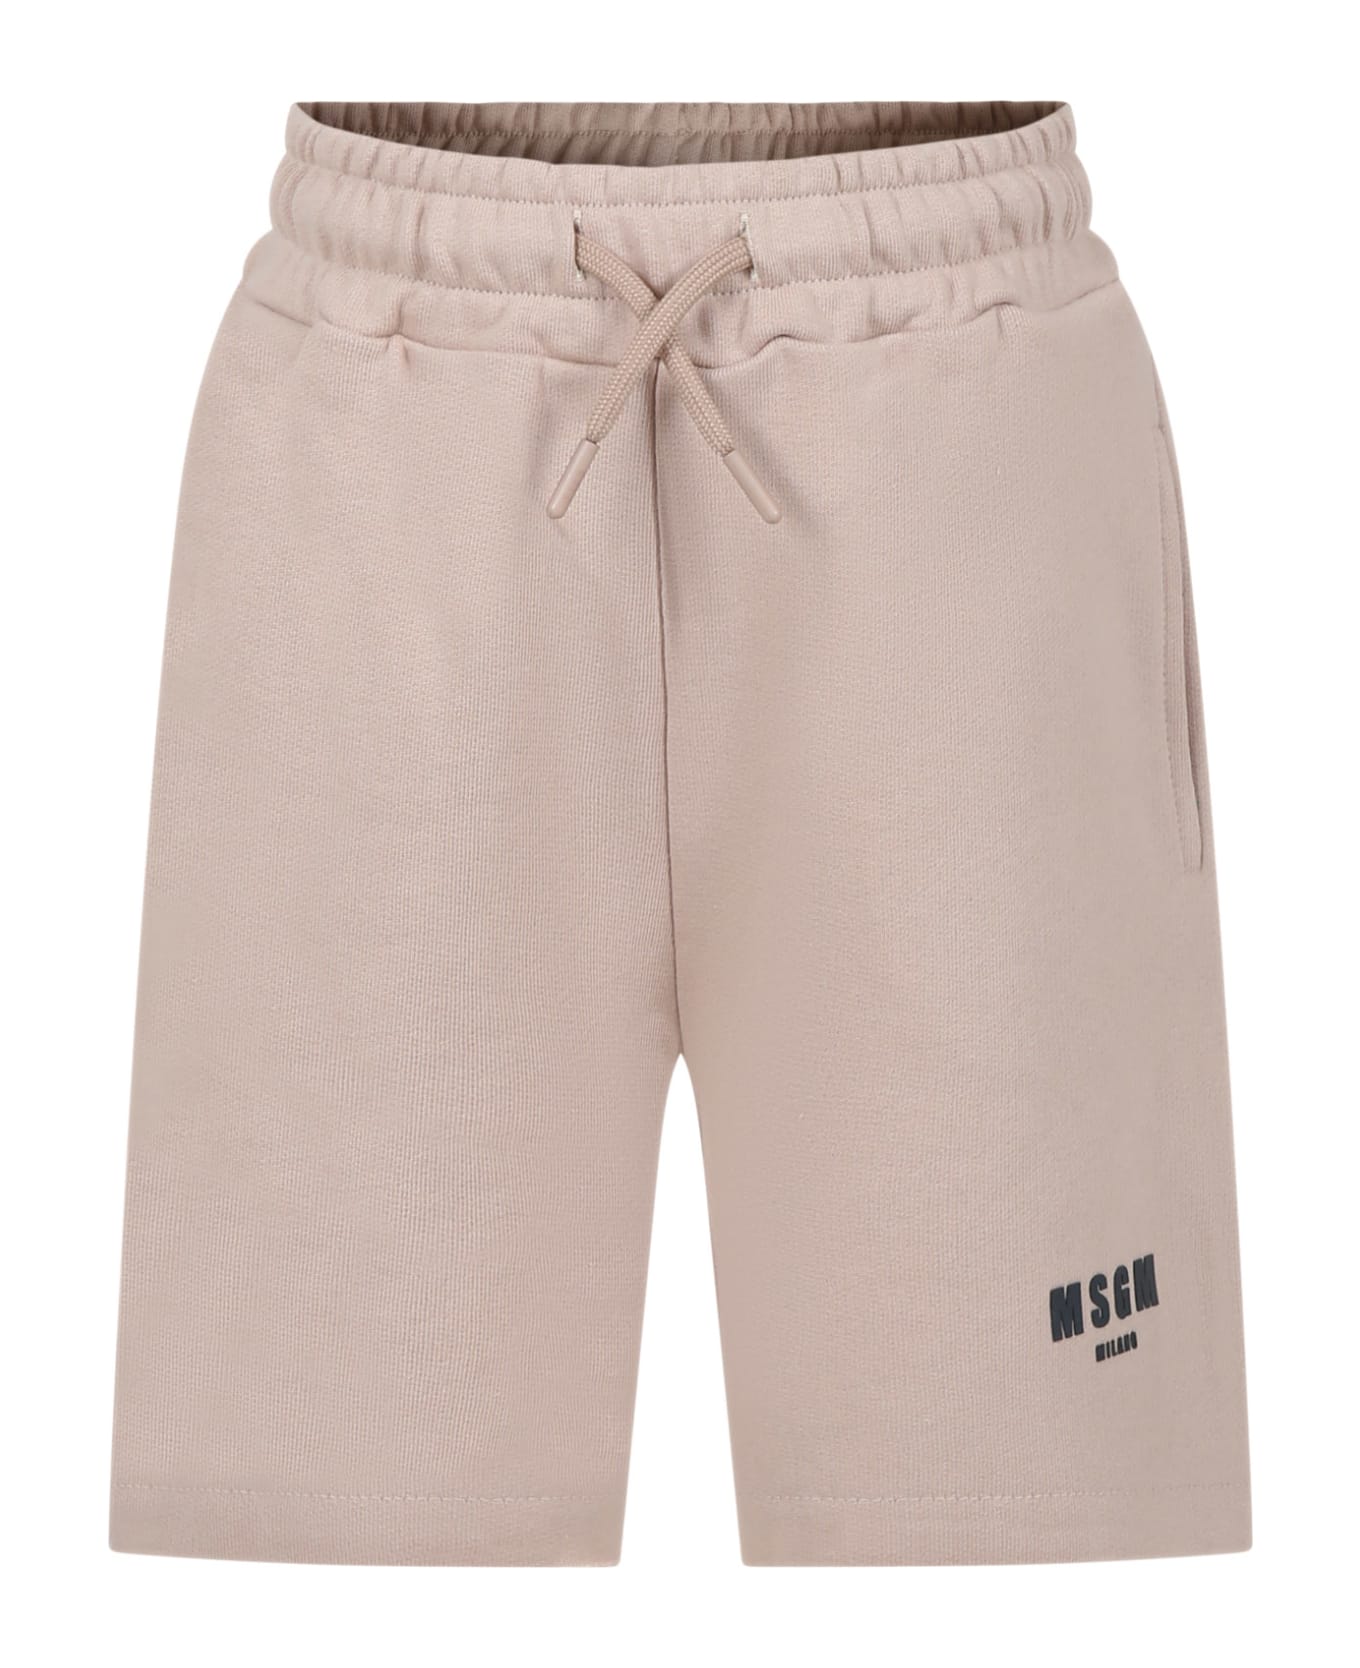 MSGM Beige Shorts For Boy With Logo - Beige